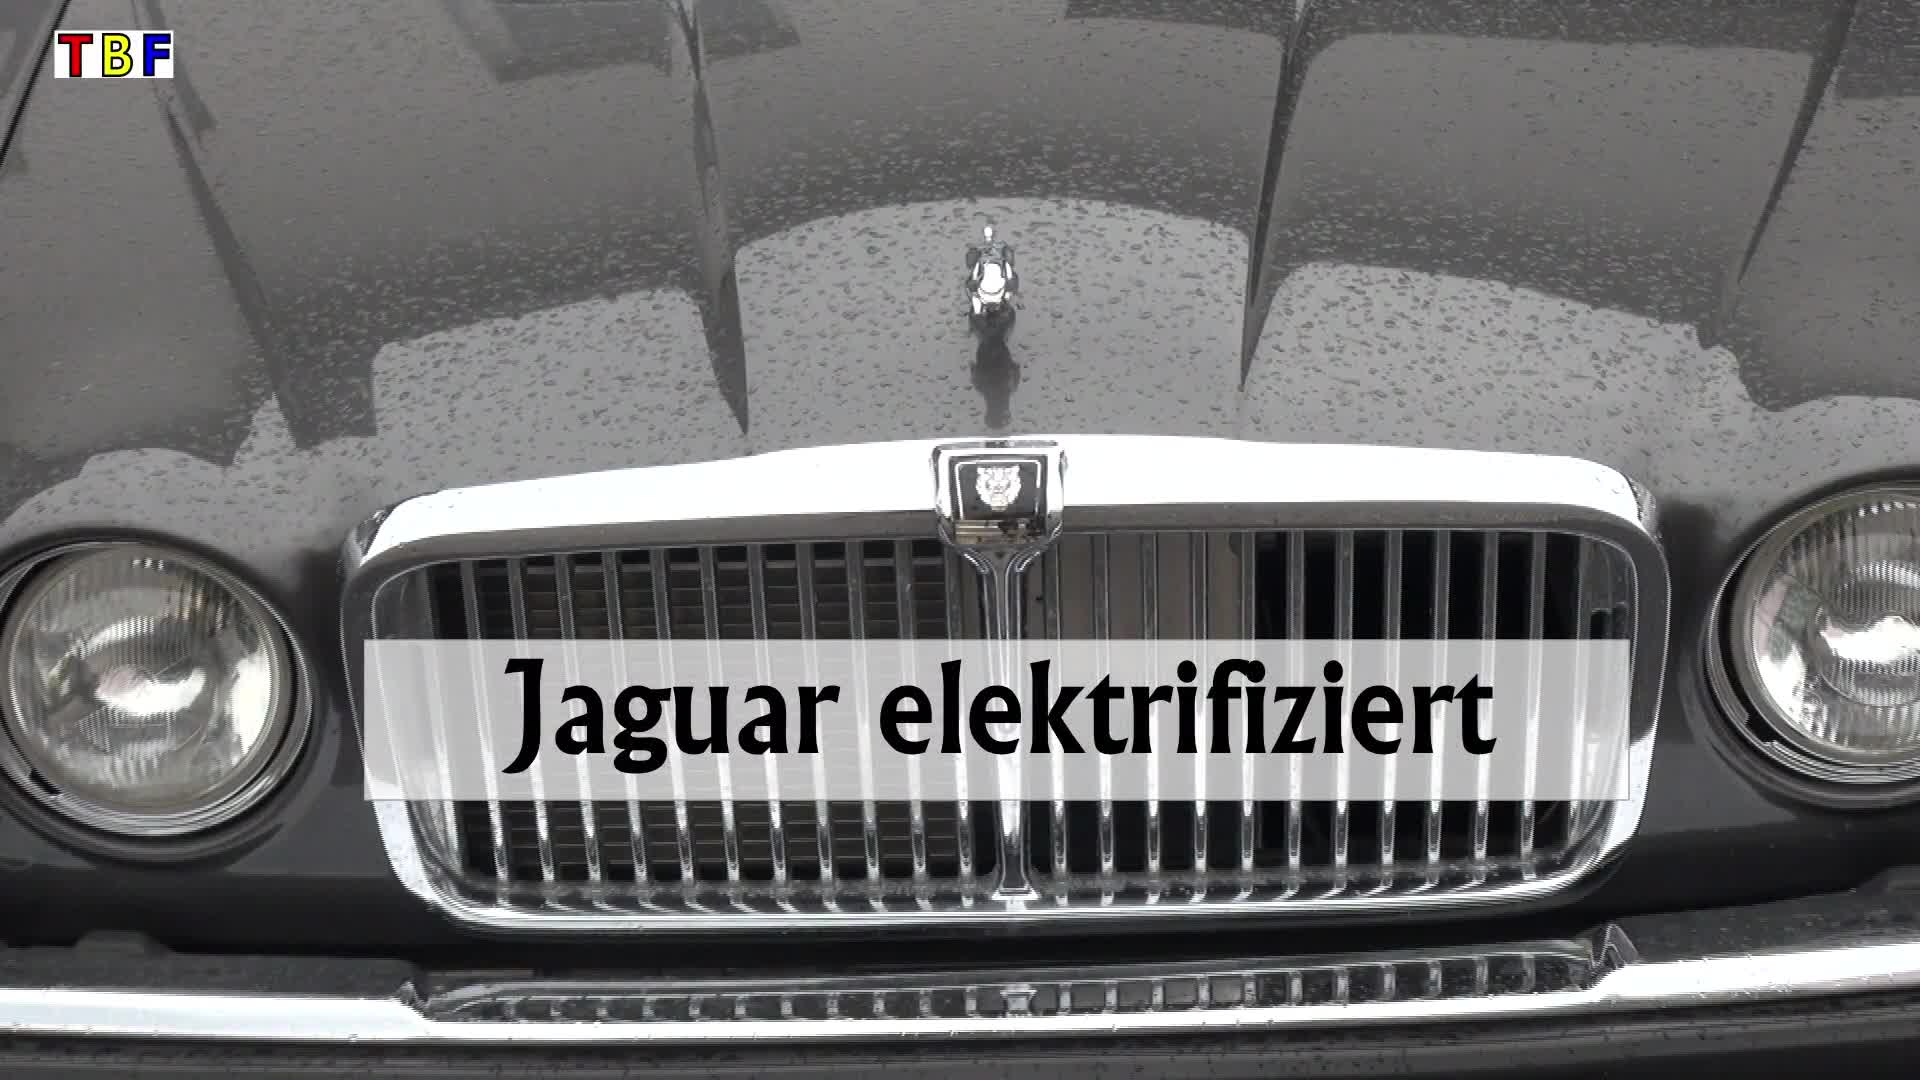 Jaguar elektrifiziert